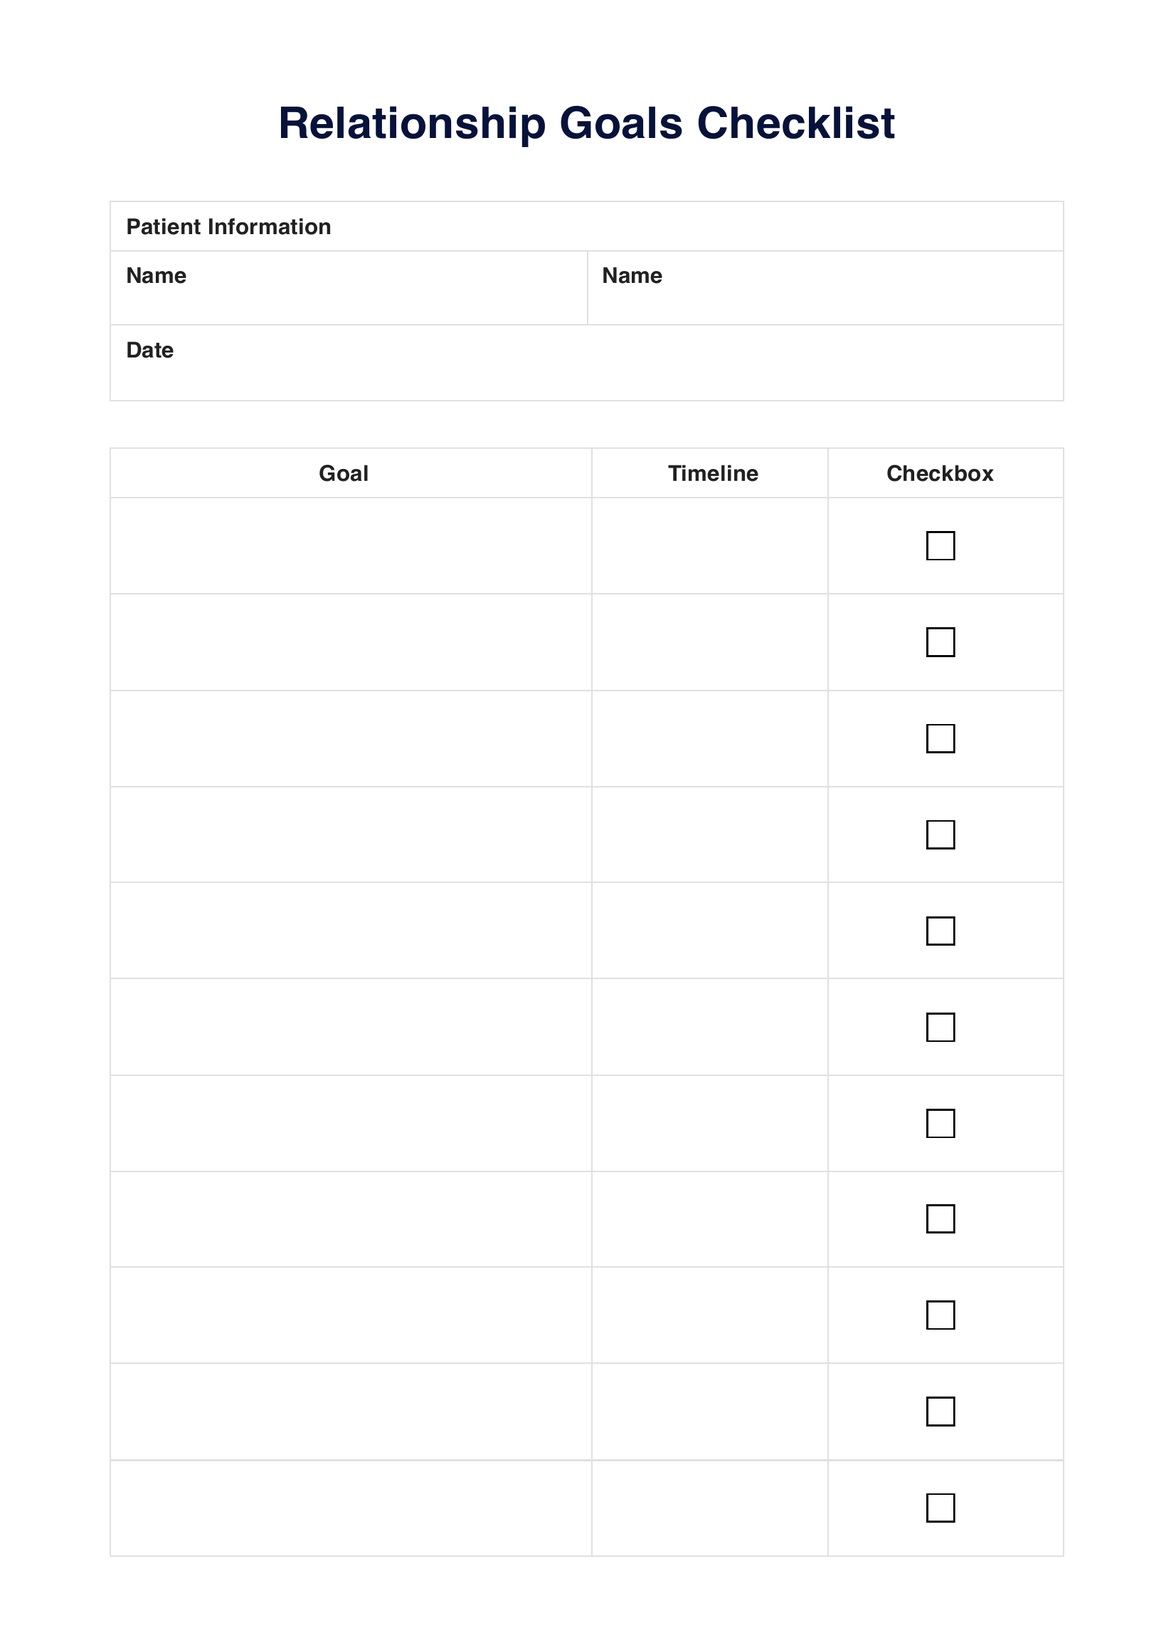 Relationship Goals Checklist PDF Example